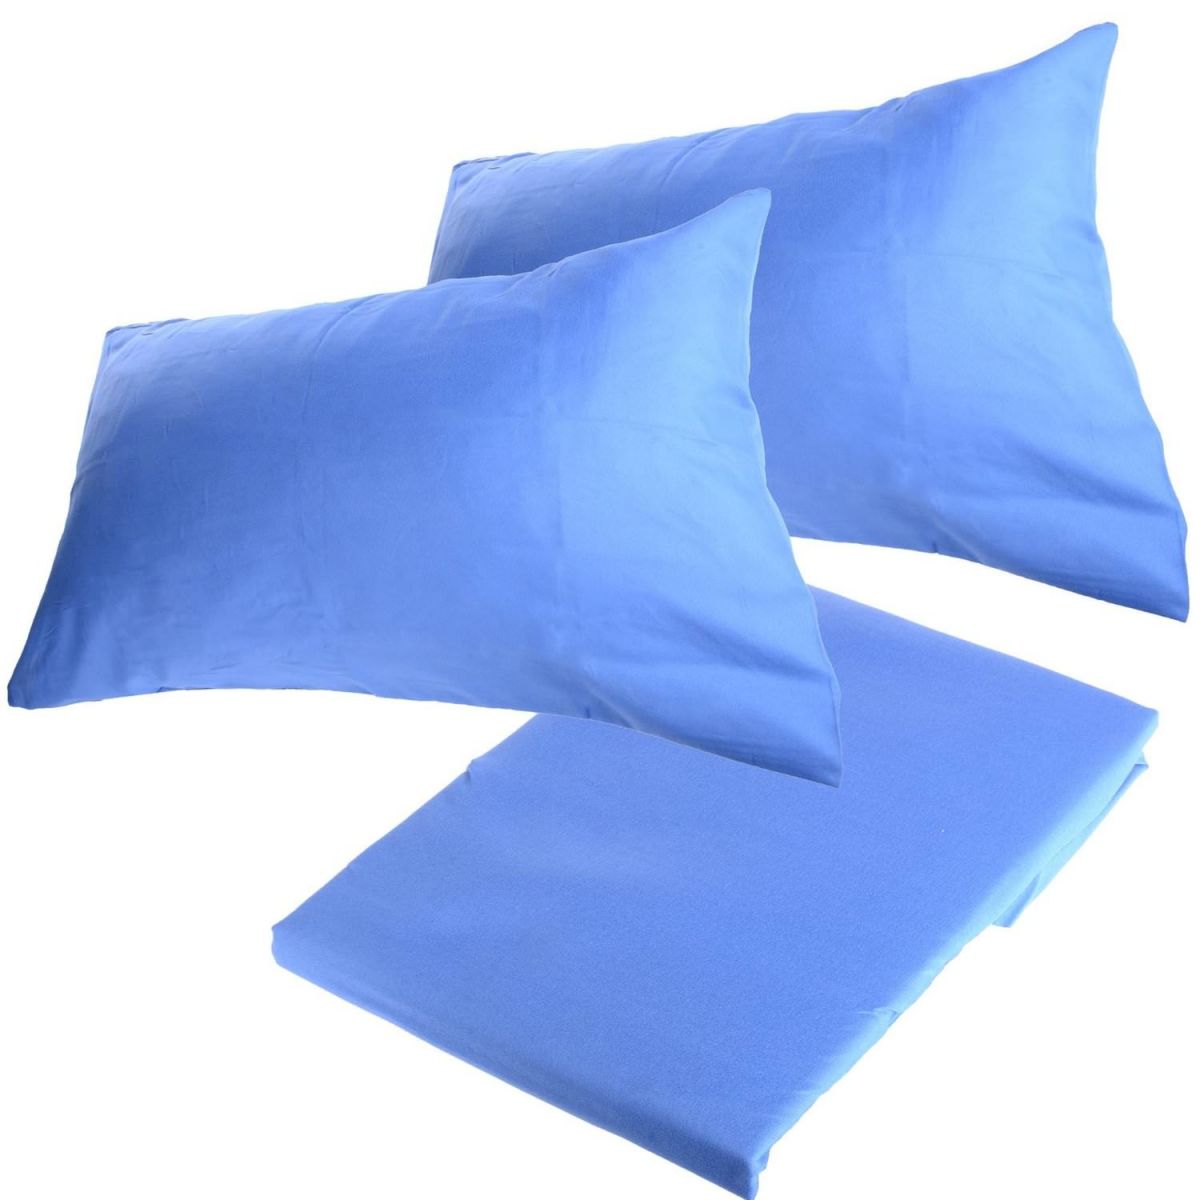 Dreamscene Plain Sheet Set with 2 Pillowcases - Blue, Double